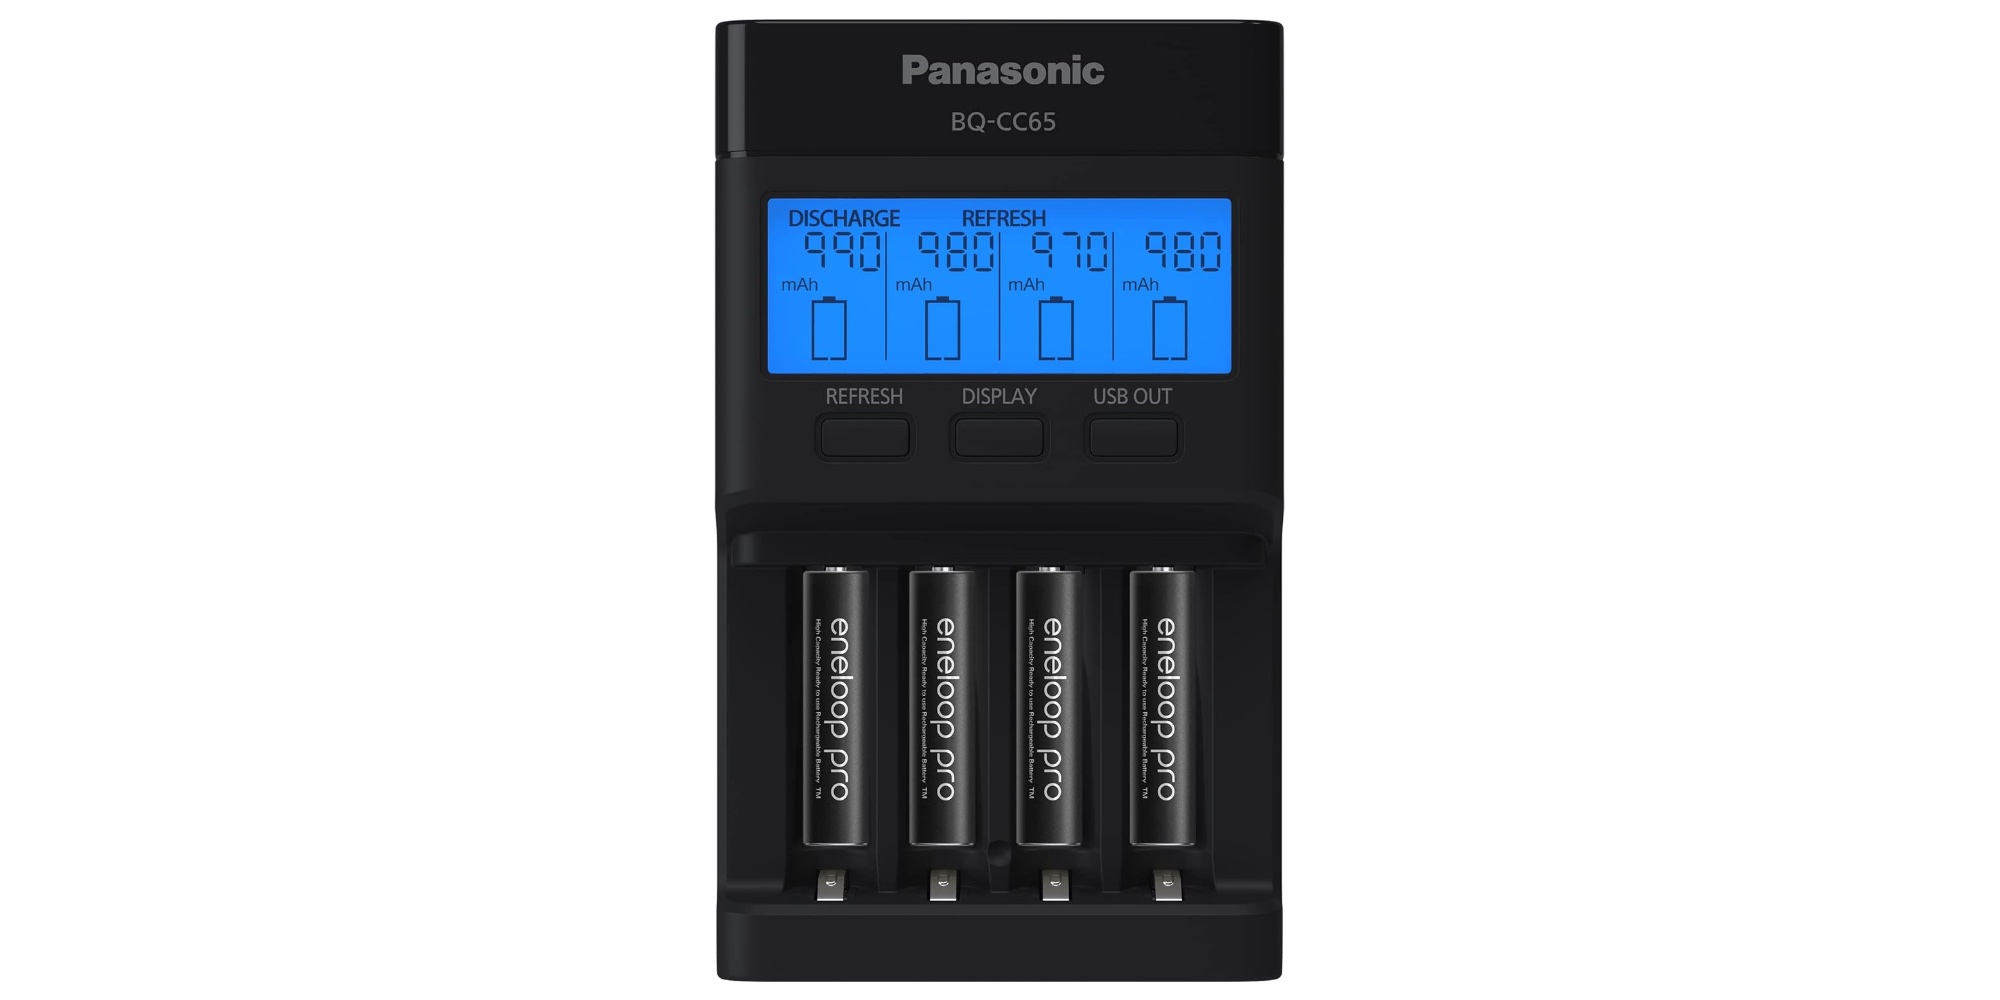 Panasonic Eneloop Pro Battery - Panasonic 